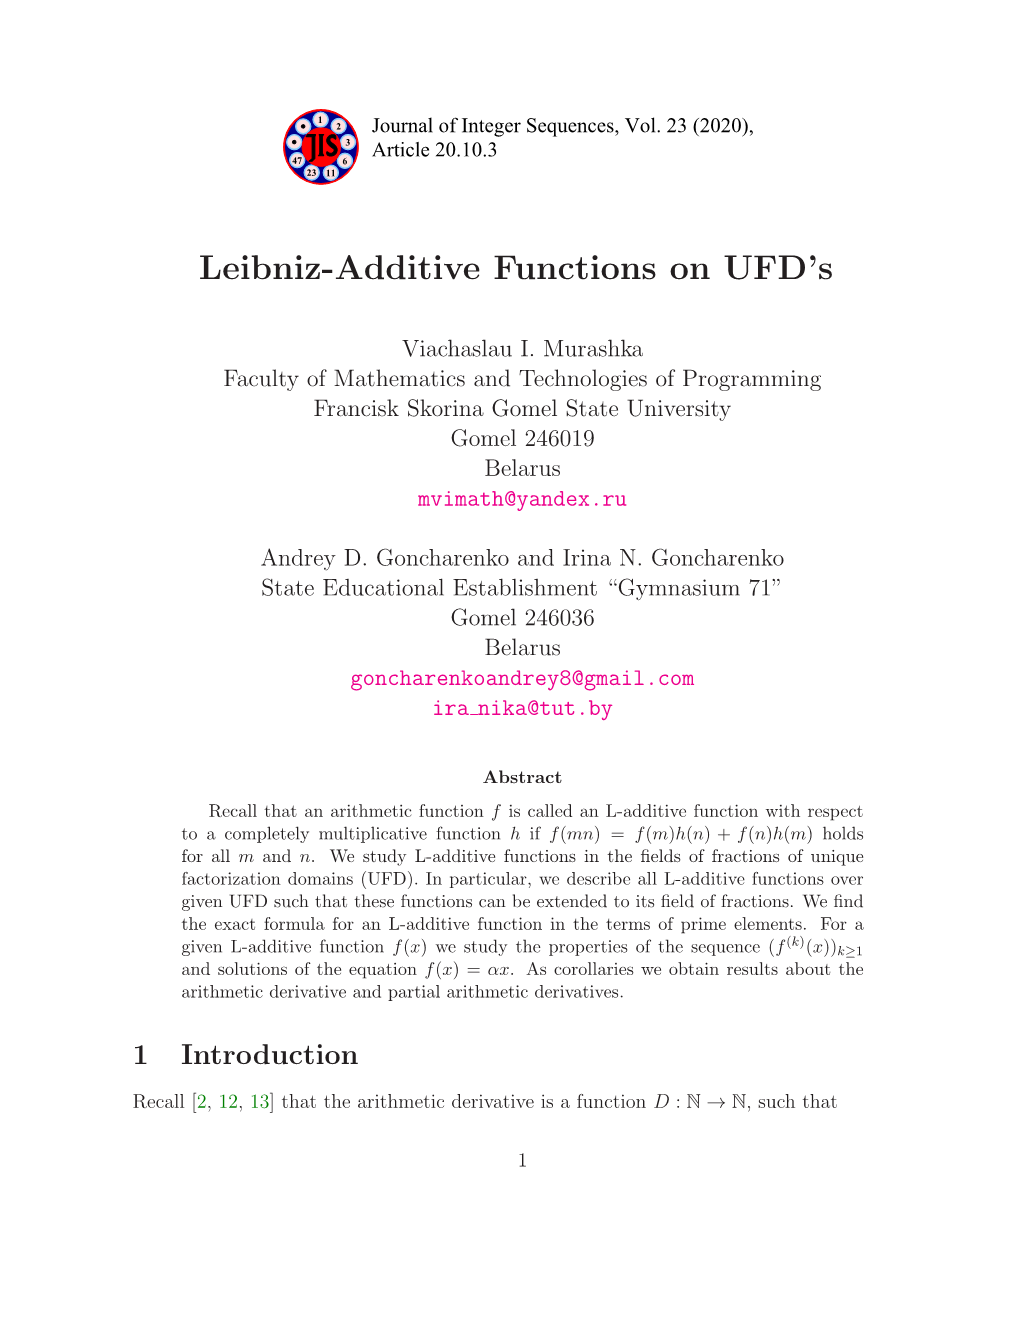 Leibniz-Additive Functions on UFD's